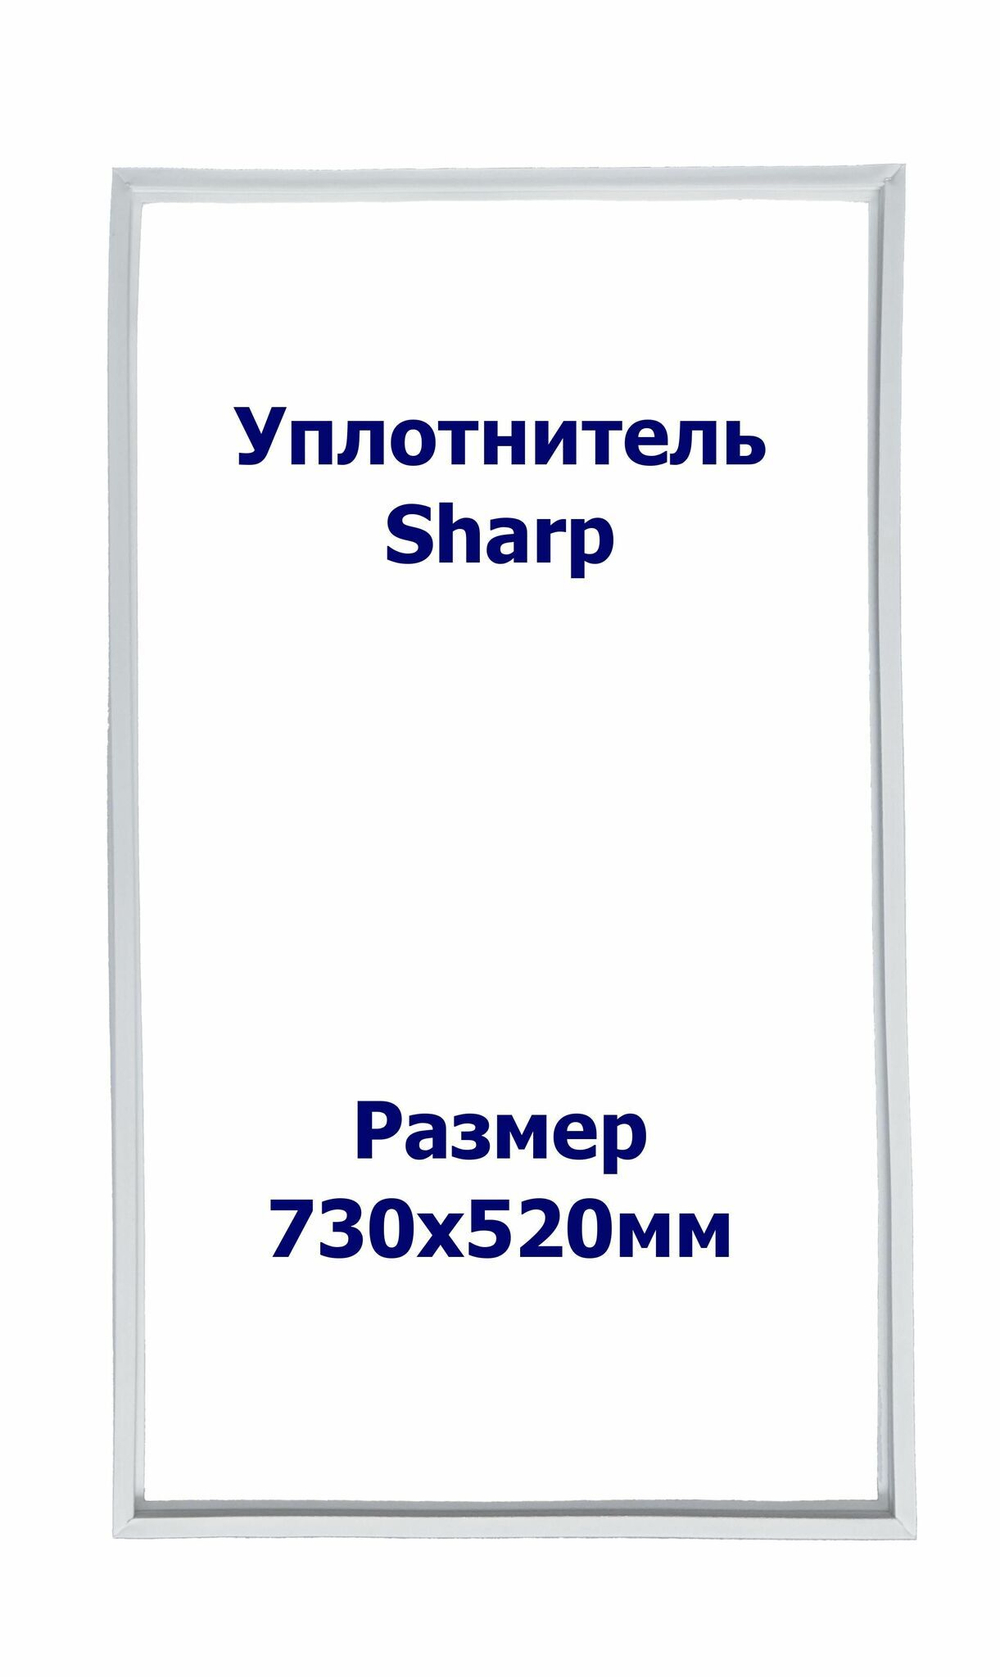 Уплотнитель Sharp SJ-64М-SL. м.к., Размер - 730х520 мм. SK